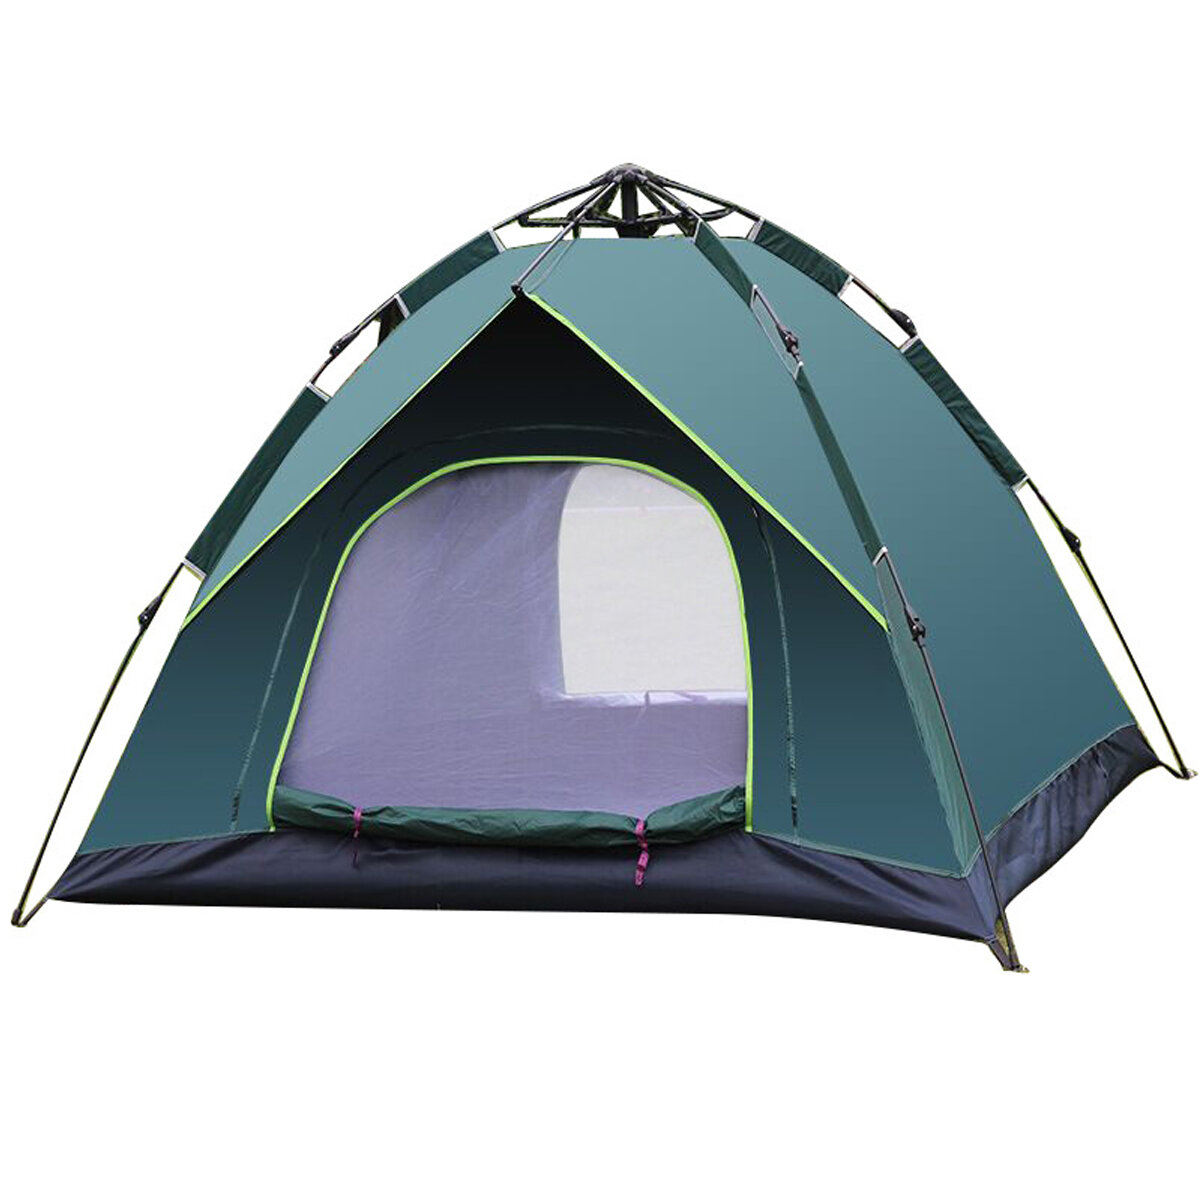 IPRee® 3-4 человека Водонепроницаемы Кемпинг Палатка 210T ПУ Ткань UV Защита палатки На открытом воздухе Пеший туризм